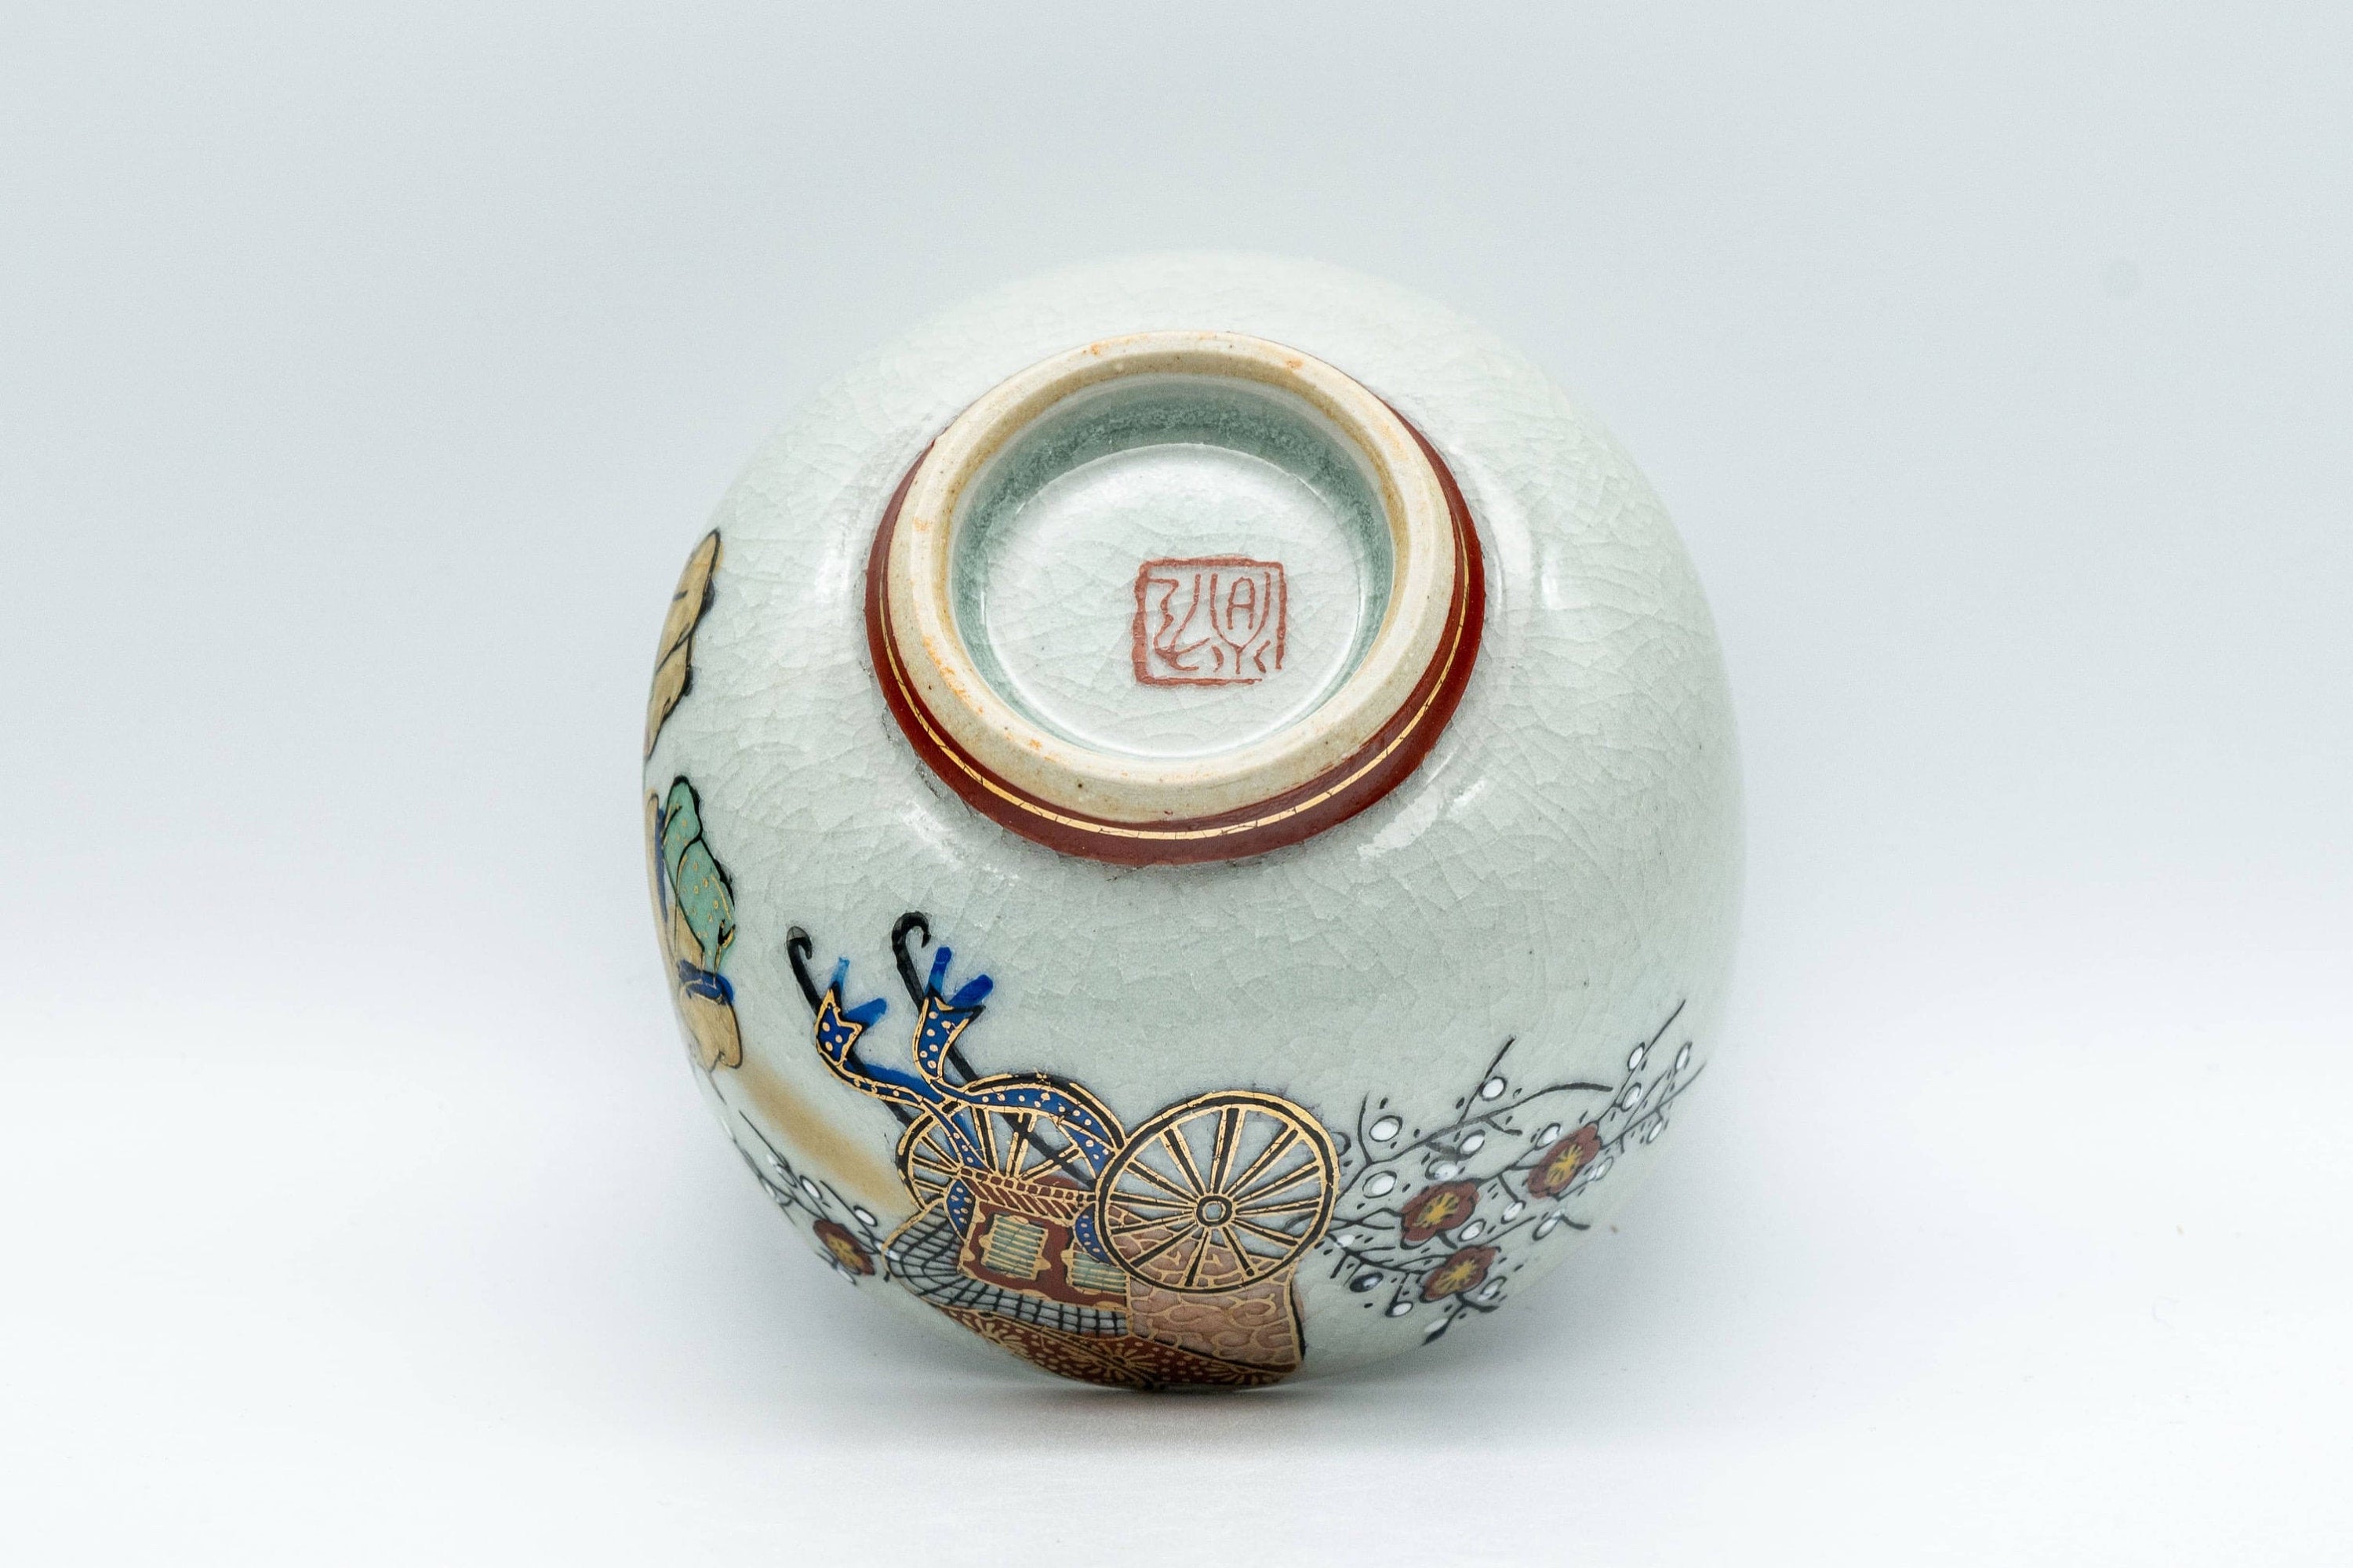 Japanese Tea Set - Kutani-yaki Teapot and Matching Lidded Cup